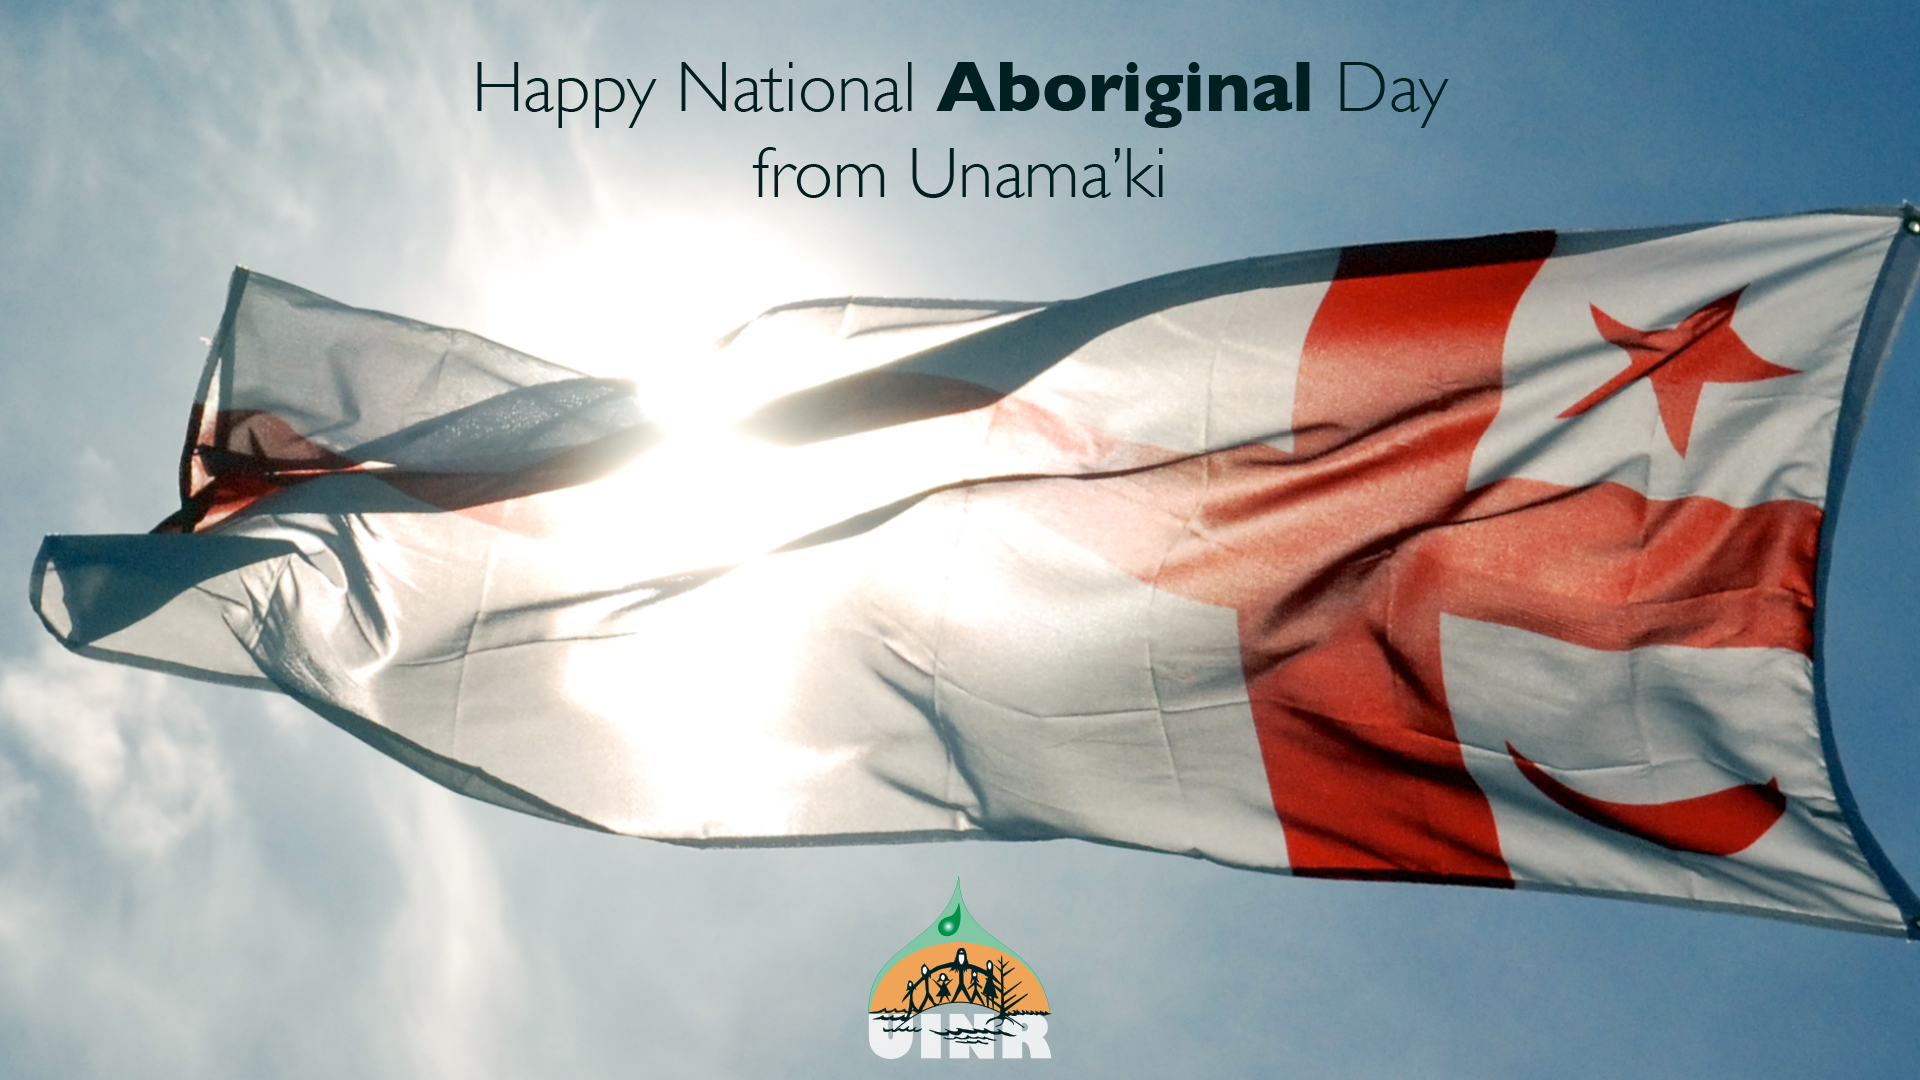 Happy National Aboriginal Day 2016